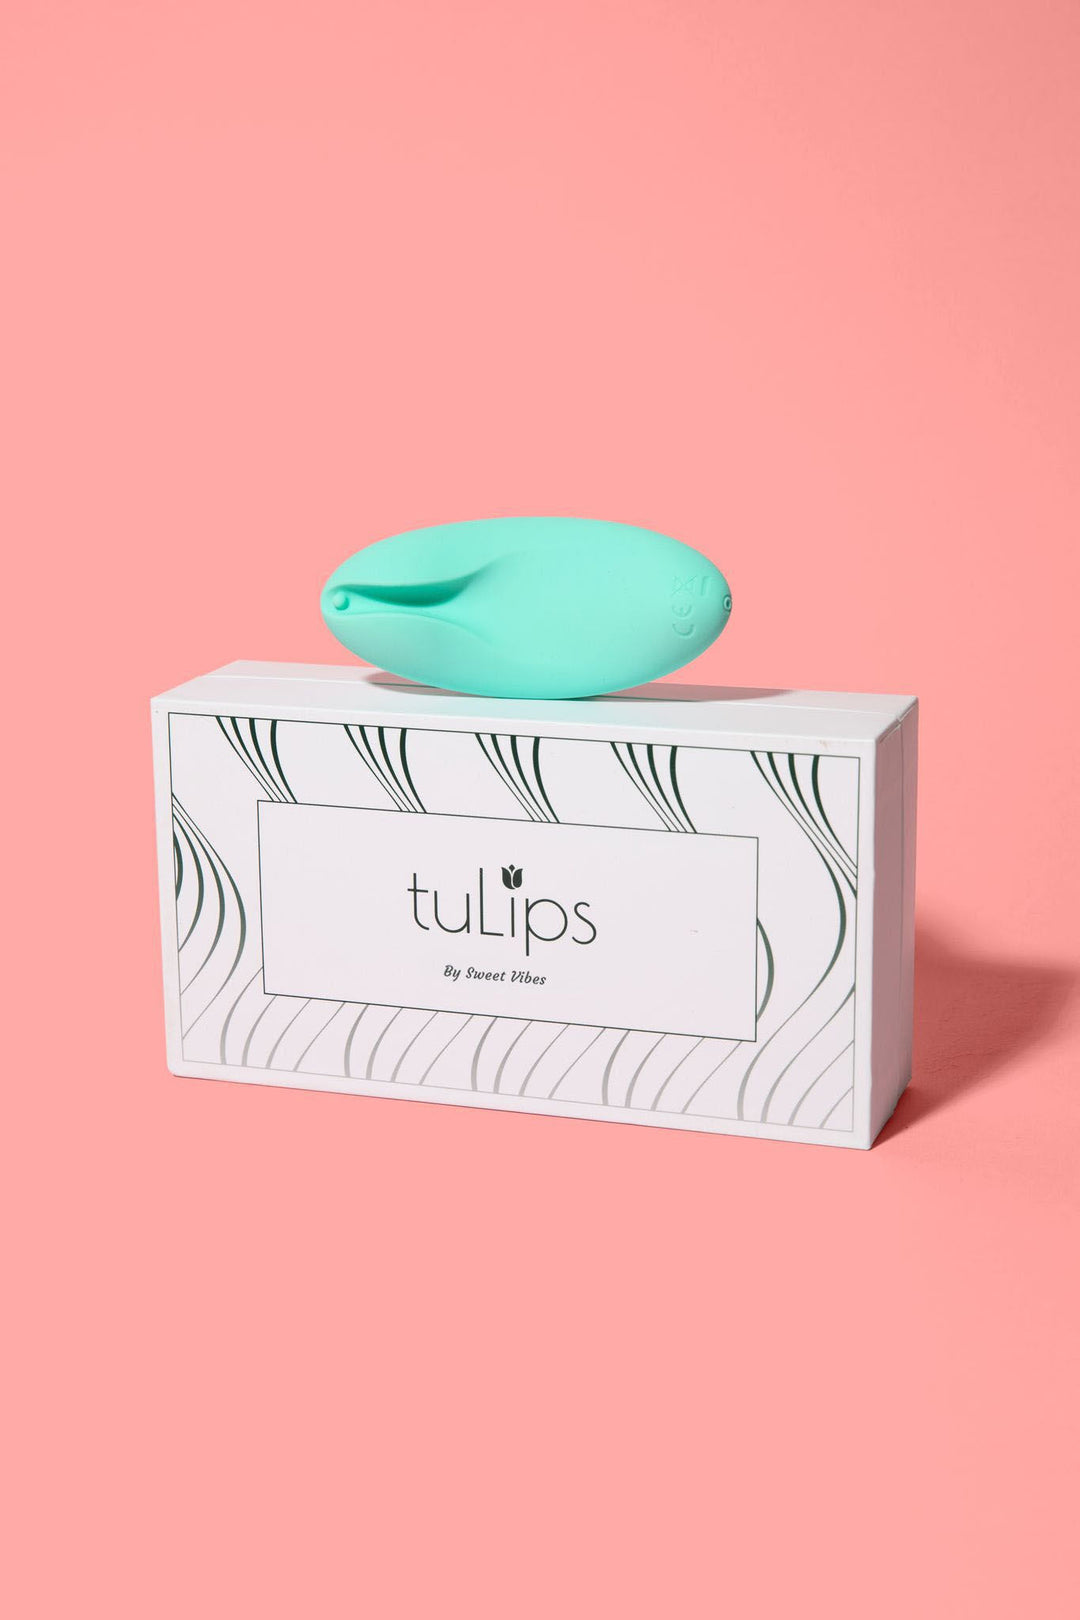 TuLips Mini Vibrator, Clit Stimulating Toy for Women